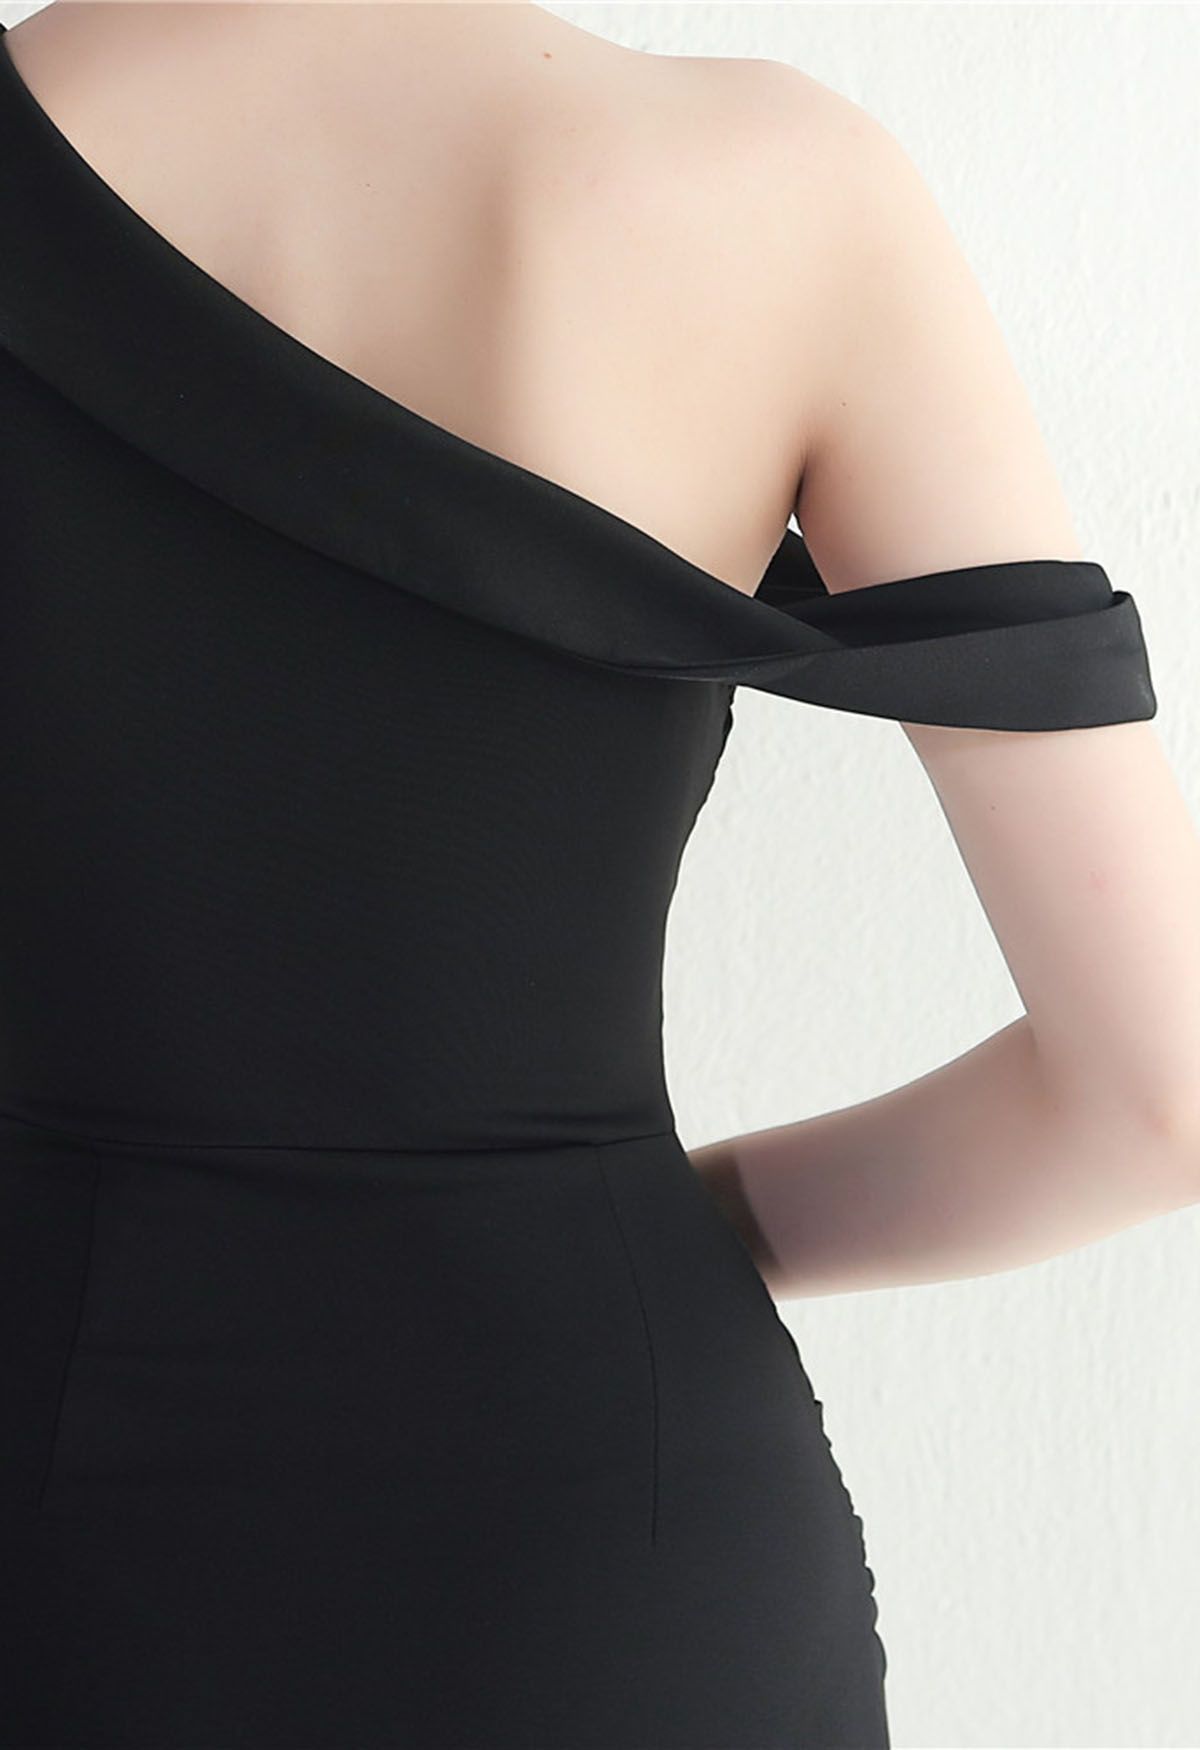 One-Shoulder Ruched Waist Split Gown in Black